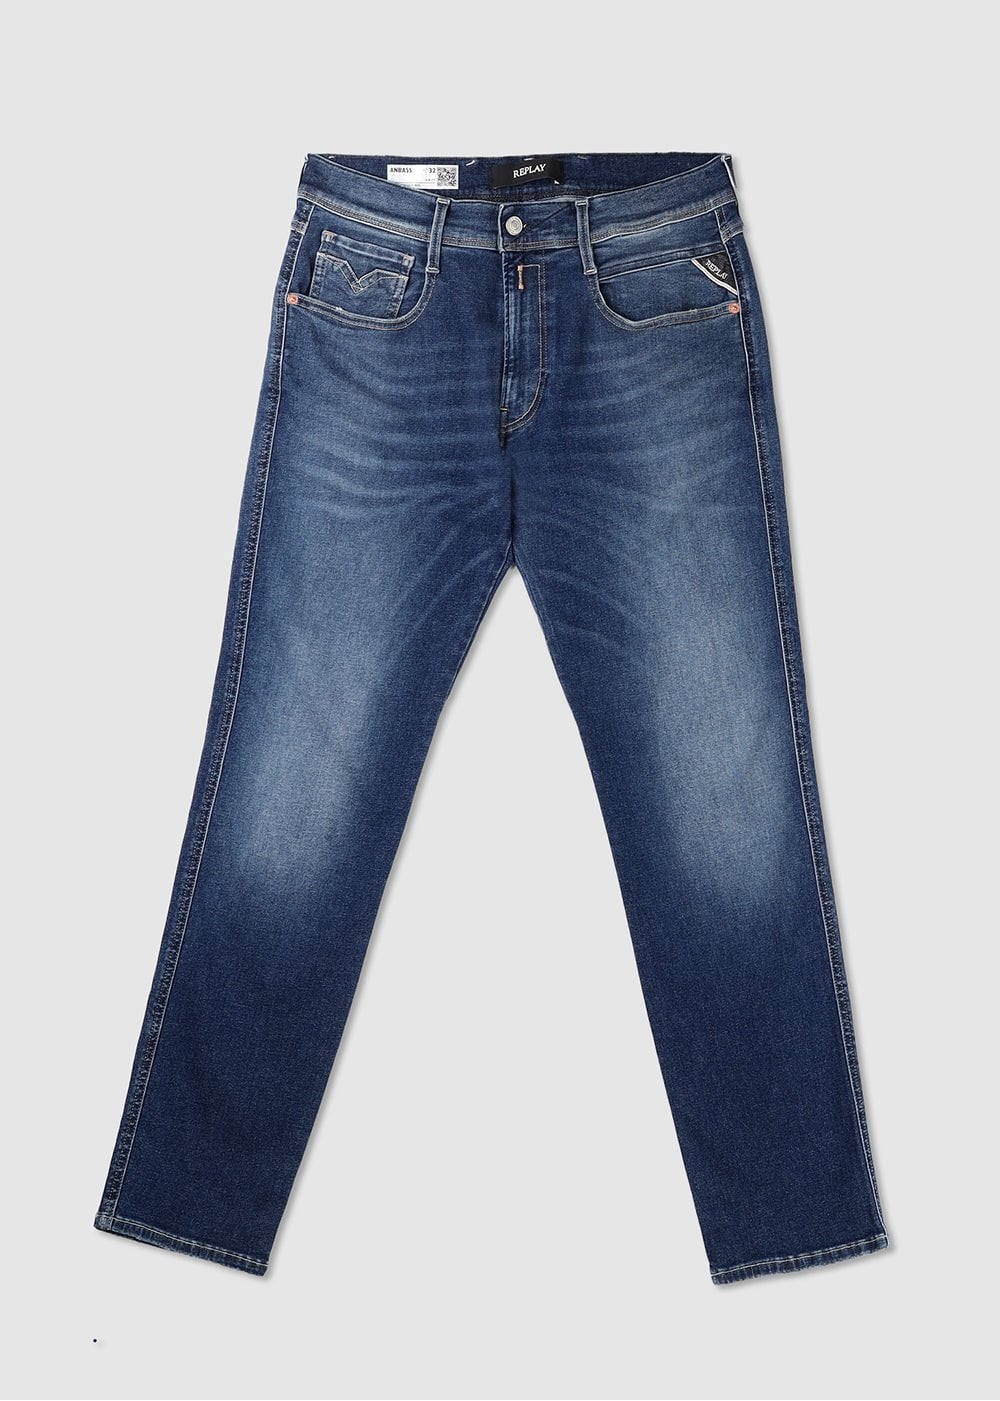 Replay Mens Anbass Hyperflex Original Jeans In Medium Blue